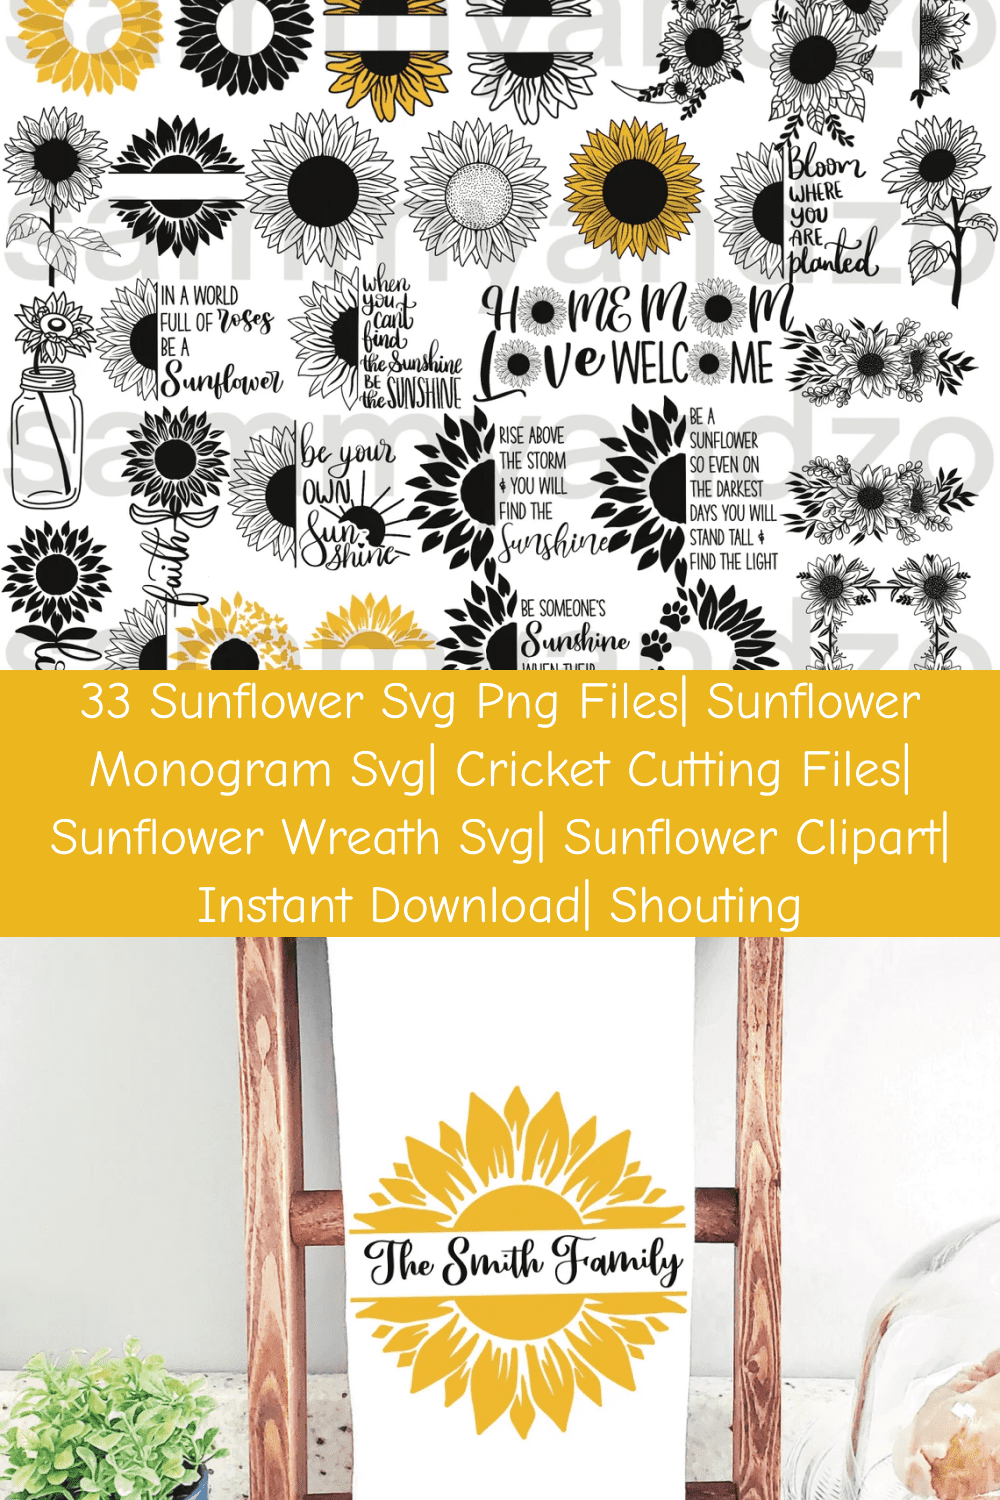 03 33 sunflower svg png files sunflower monogram svg cricket cutting files sunflower wreath svg sunflower clipart instant download shouting pinterest